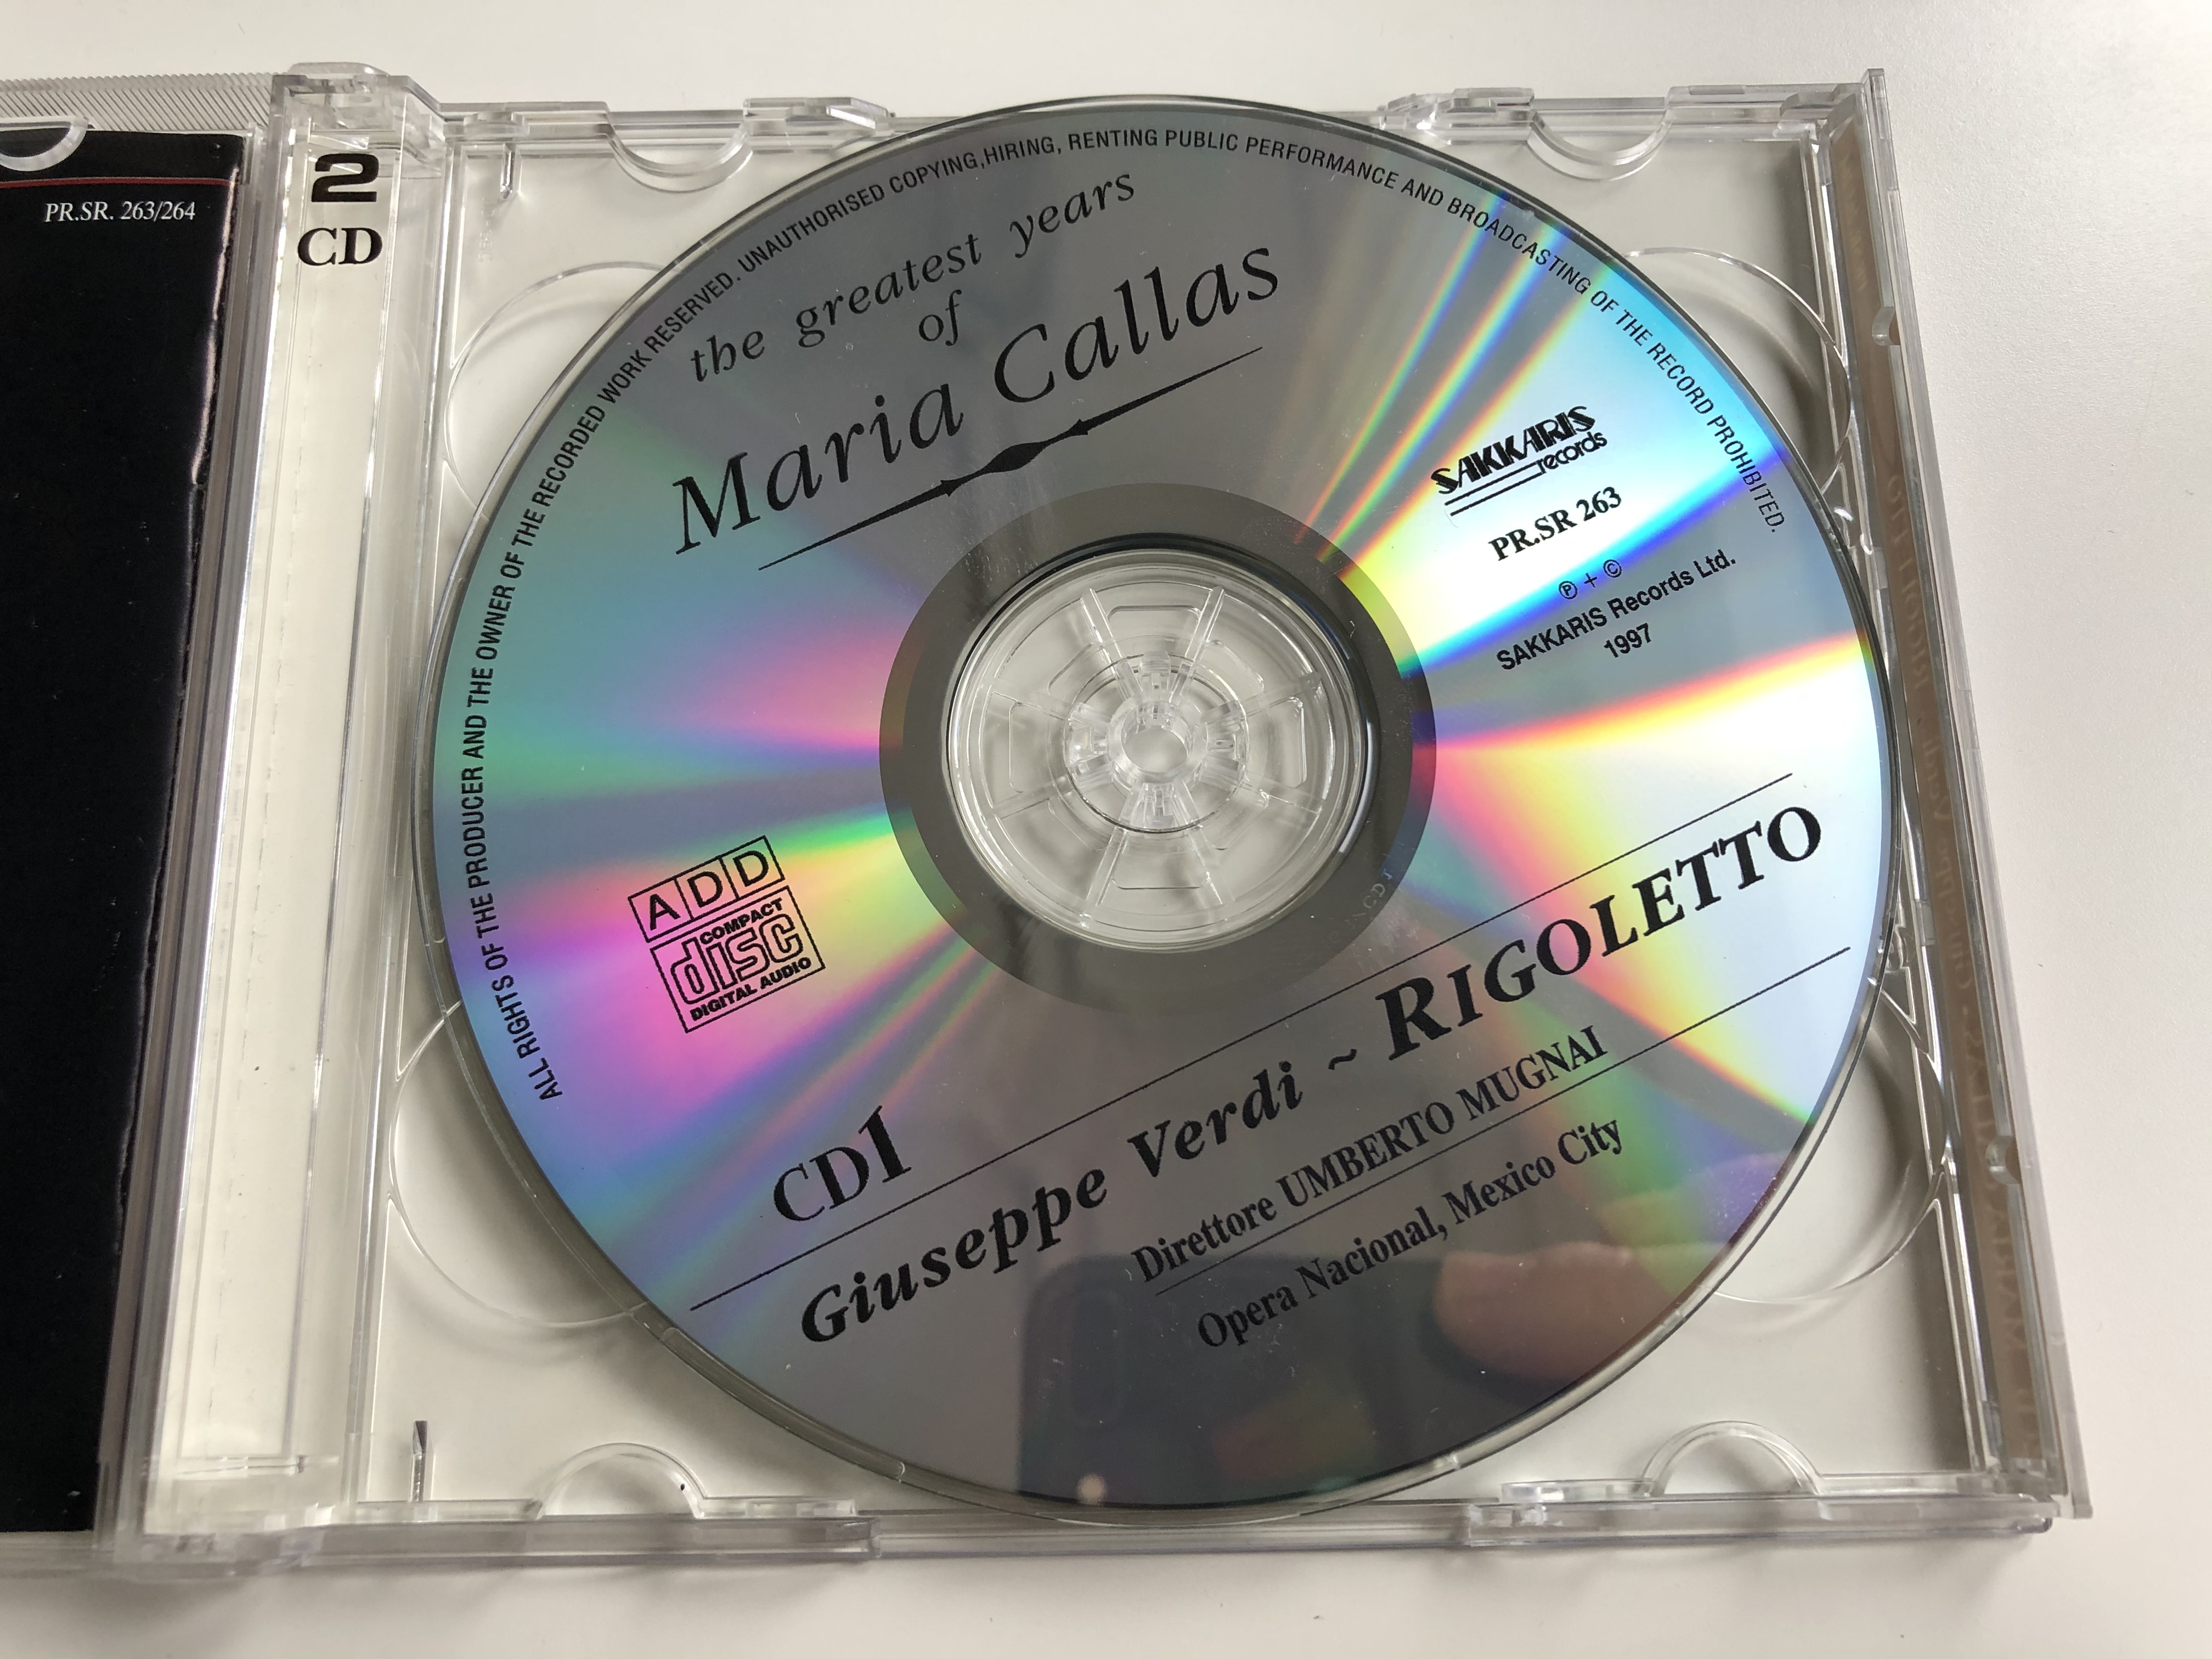 the-greatest-years-of-maria-callas-giuseppe-verdi-rigoletto-direttore-umberto-mugnai-mexico-city-1952-sakkaris-records-2x-audio-cd-1997-pr.sr.-263264-6-.jpg